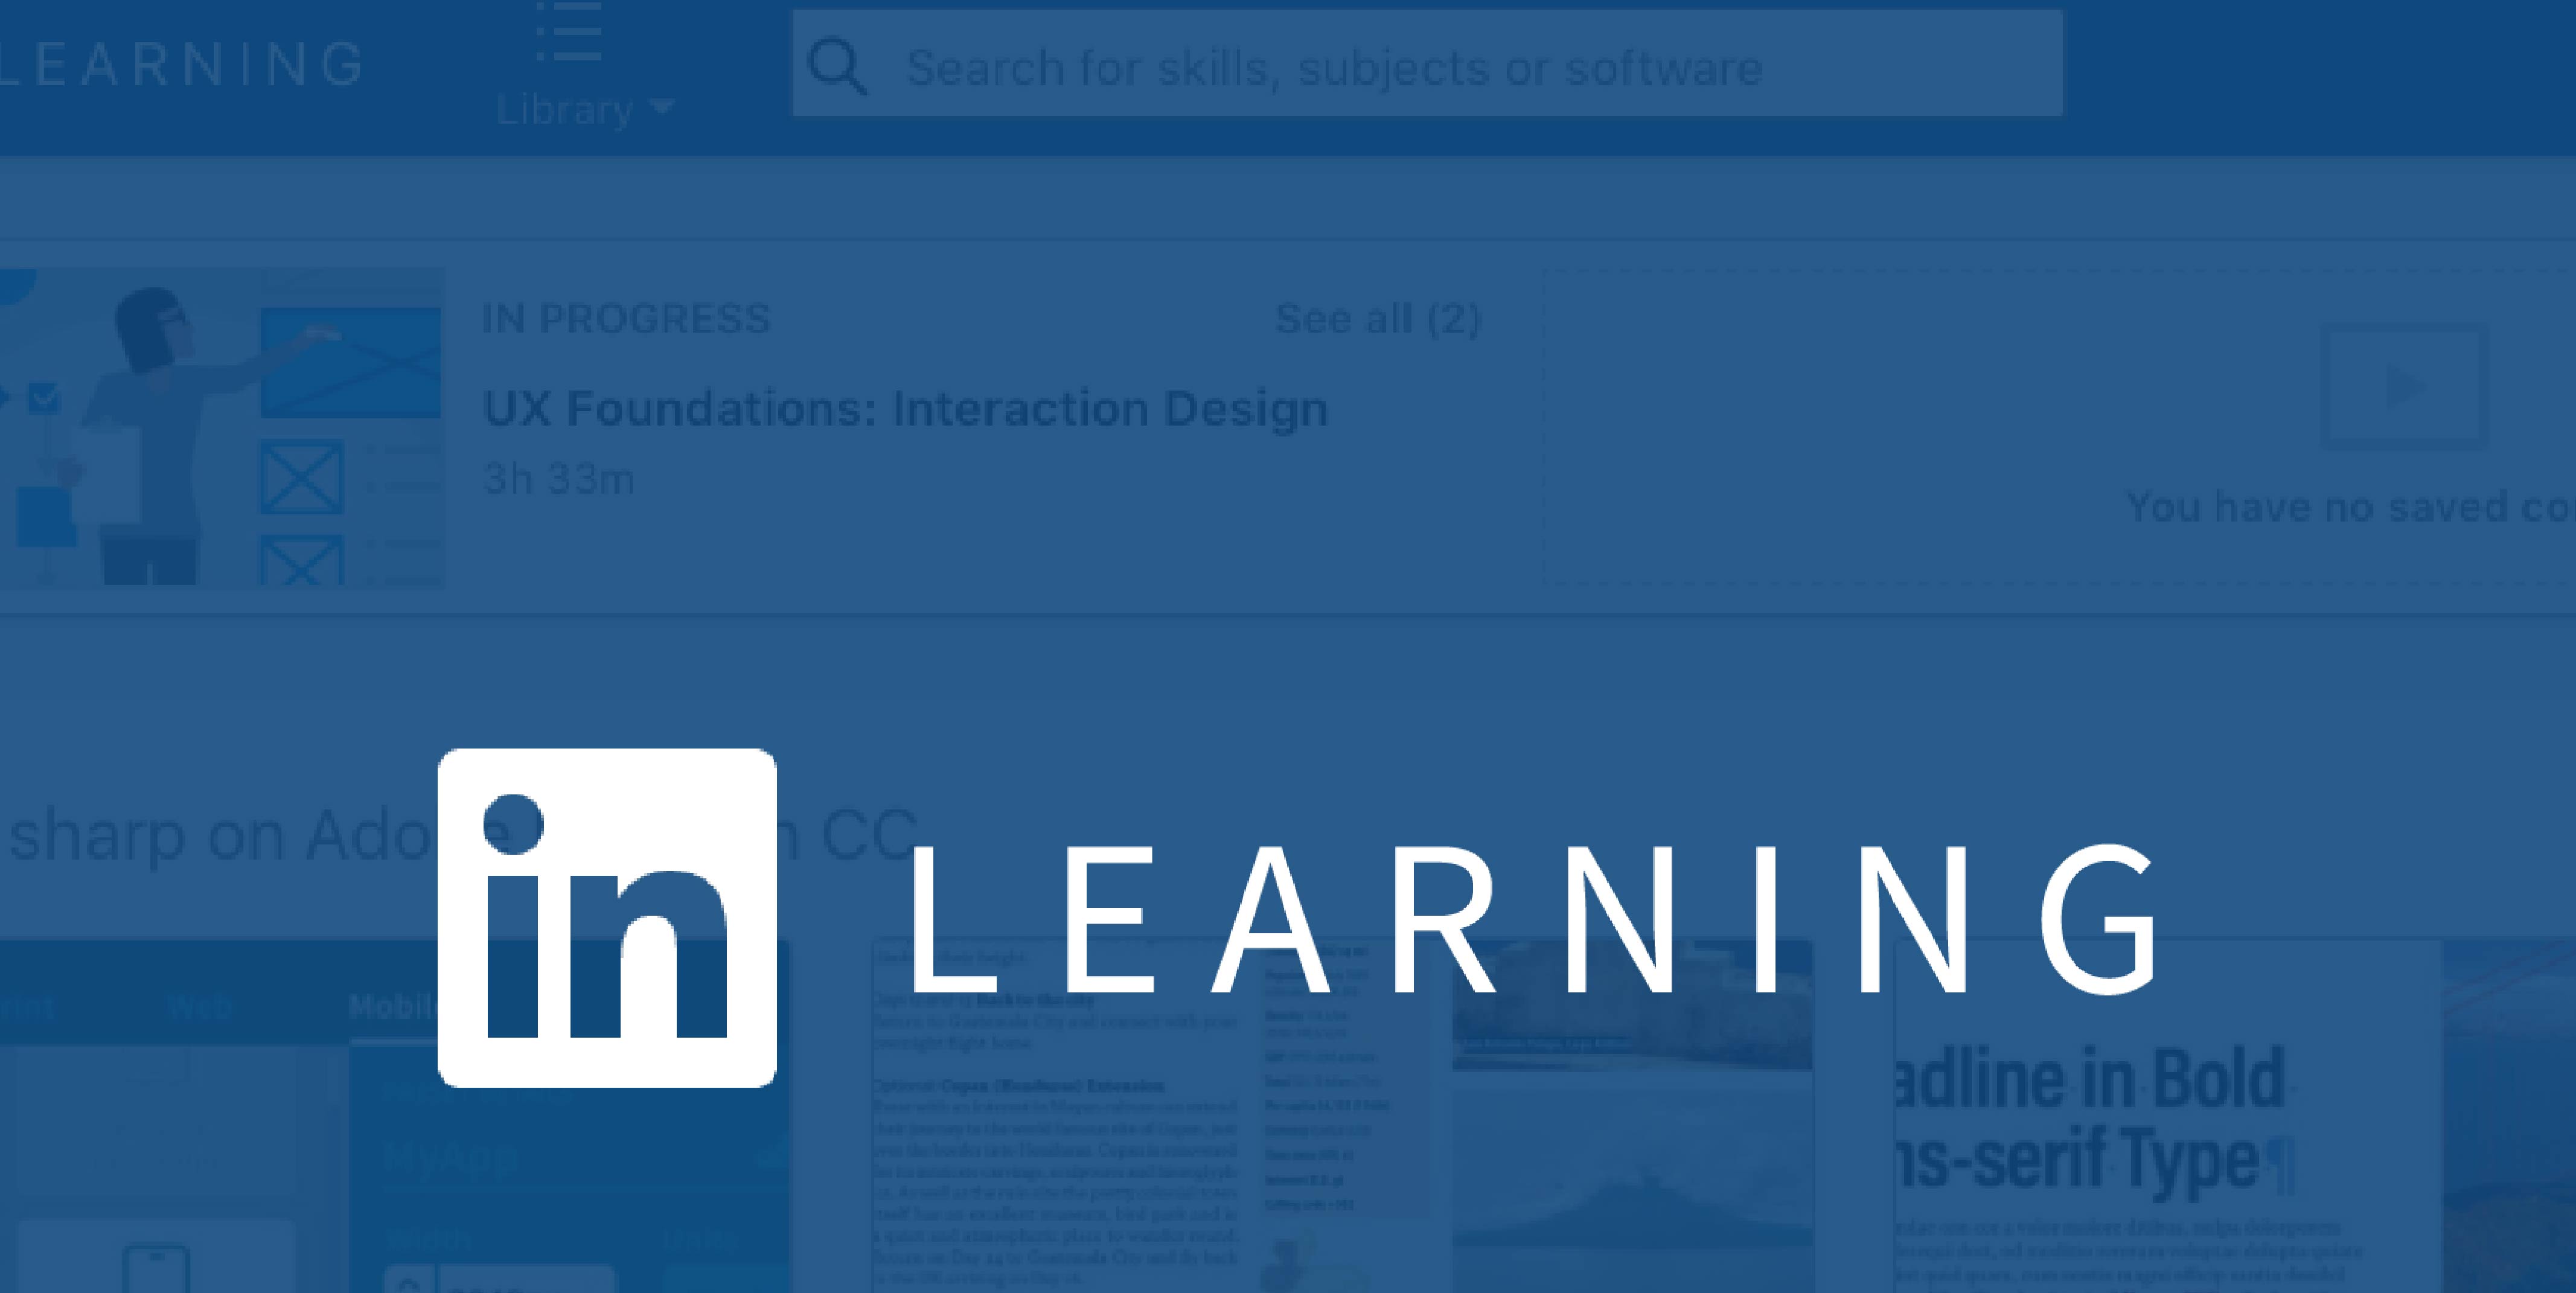 corporate linkedin learning